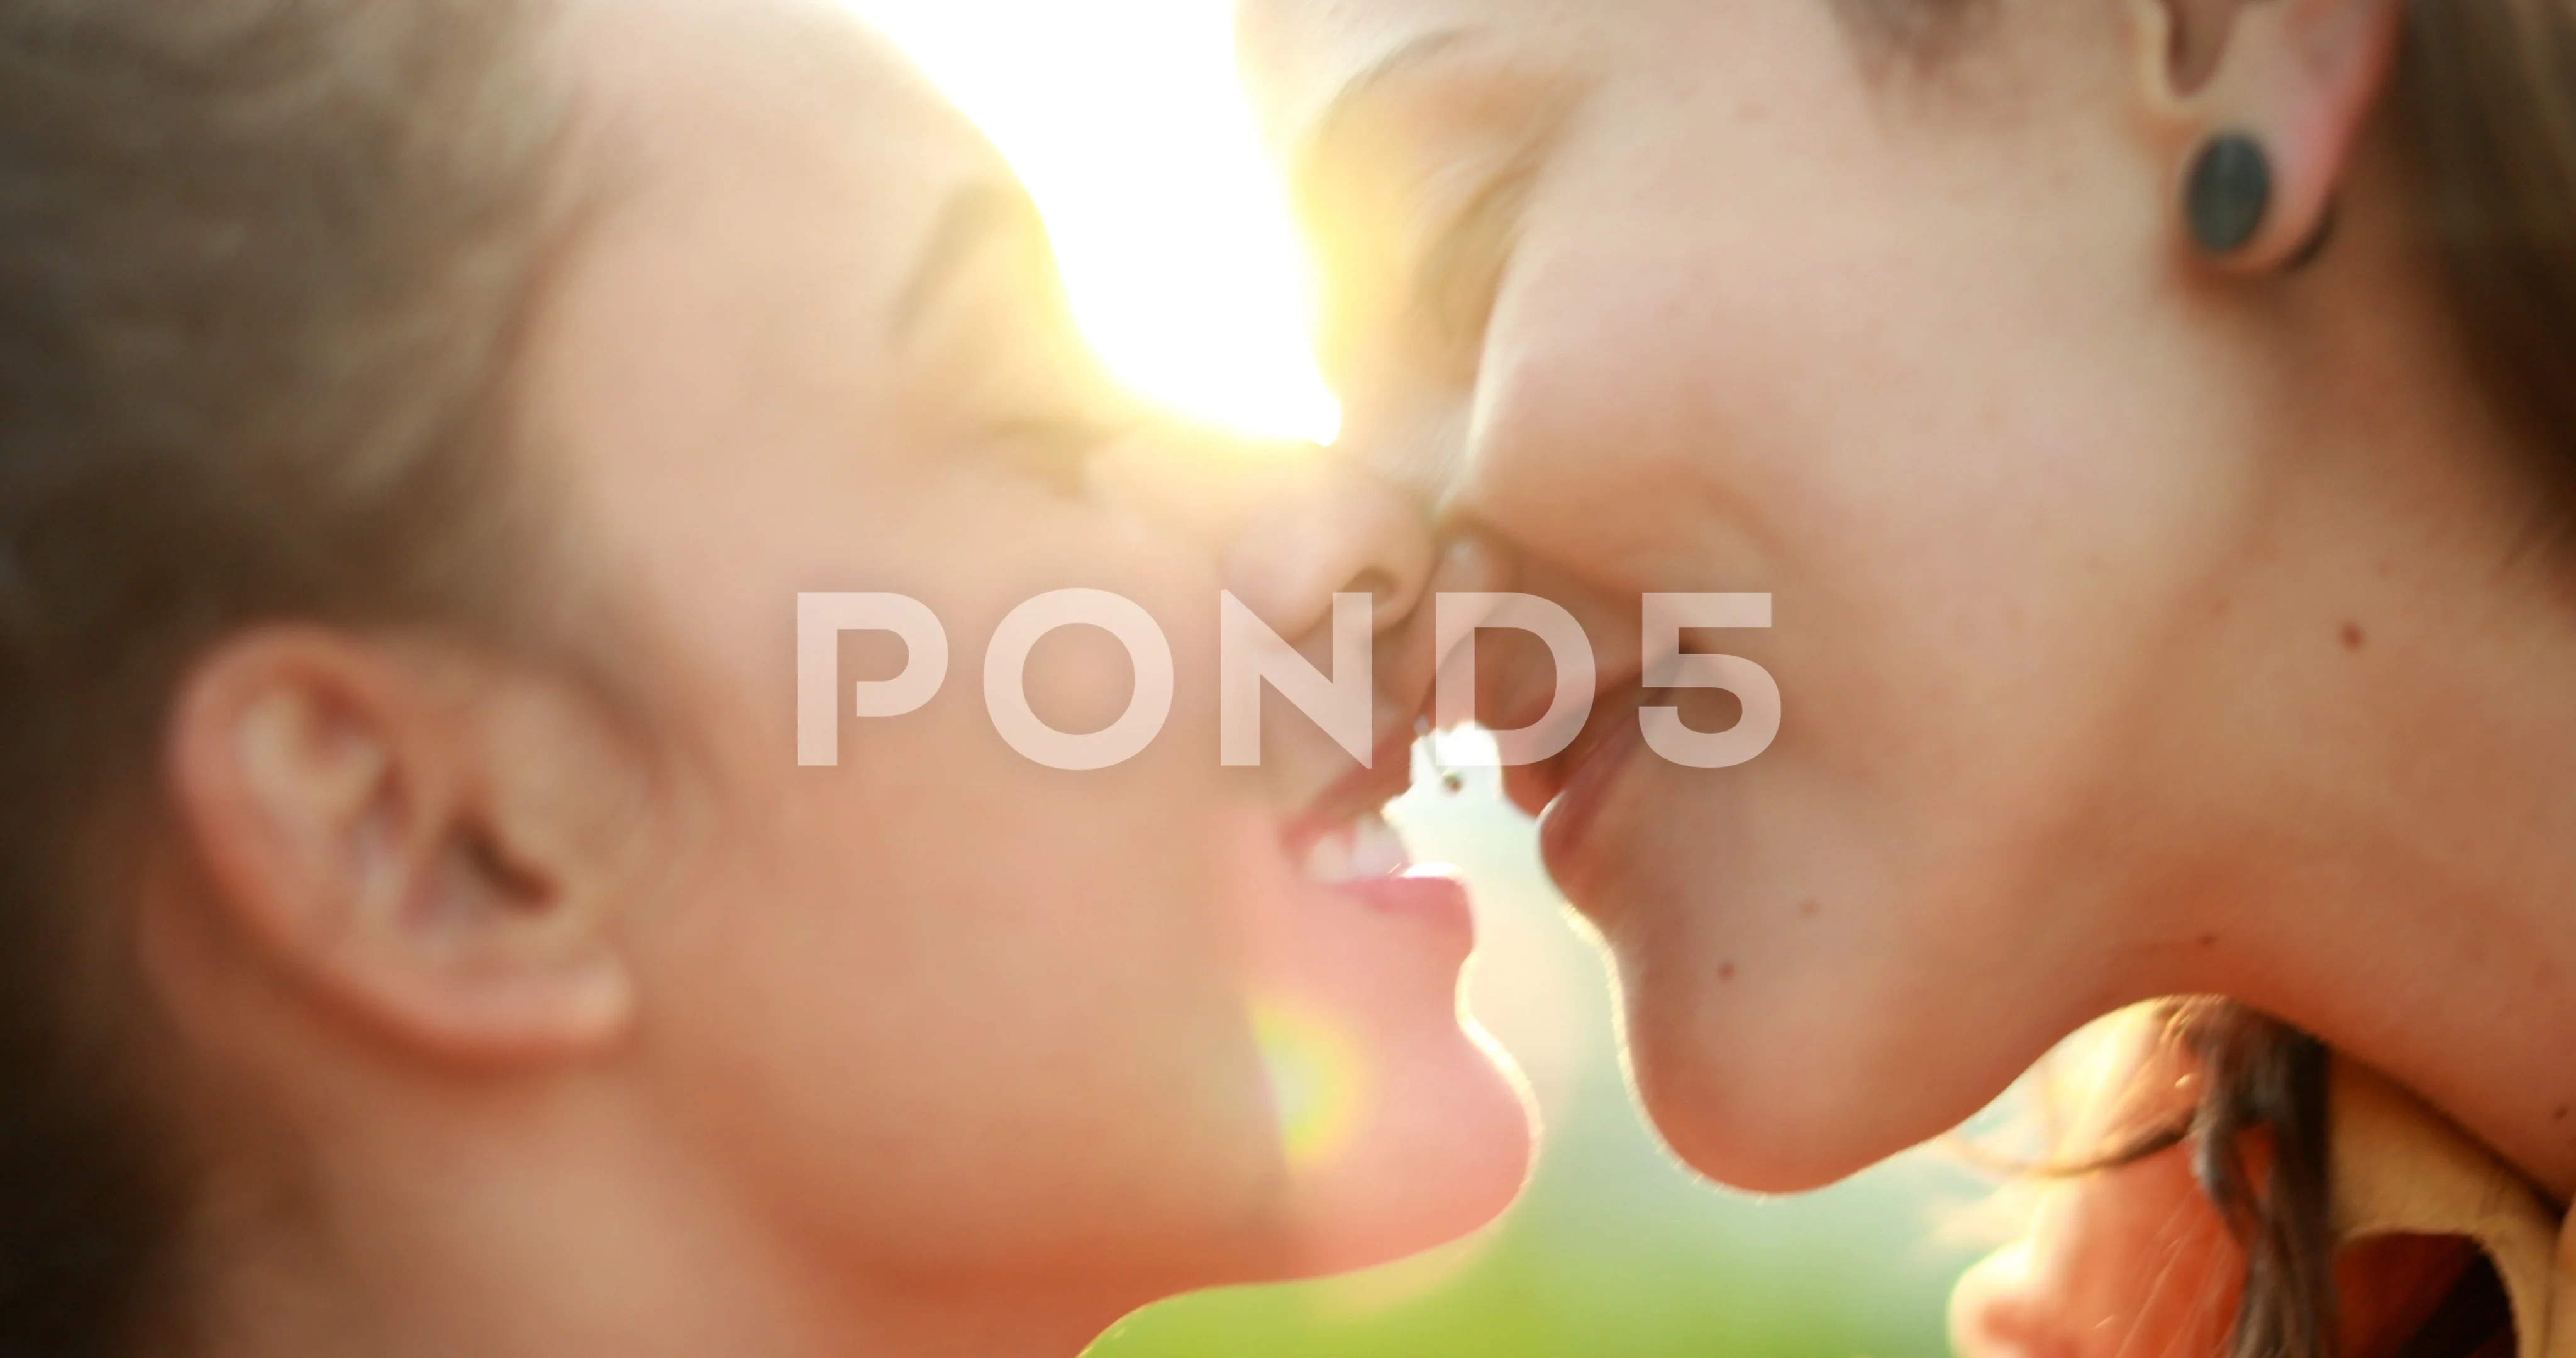 Lesbian Passionate Kissing